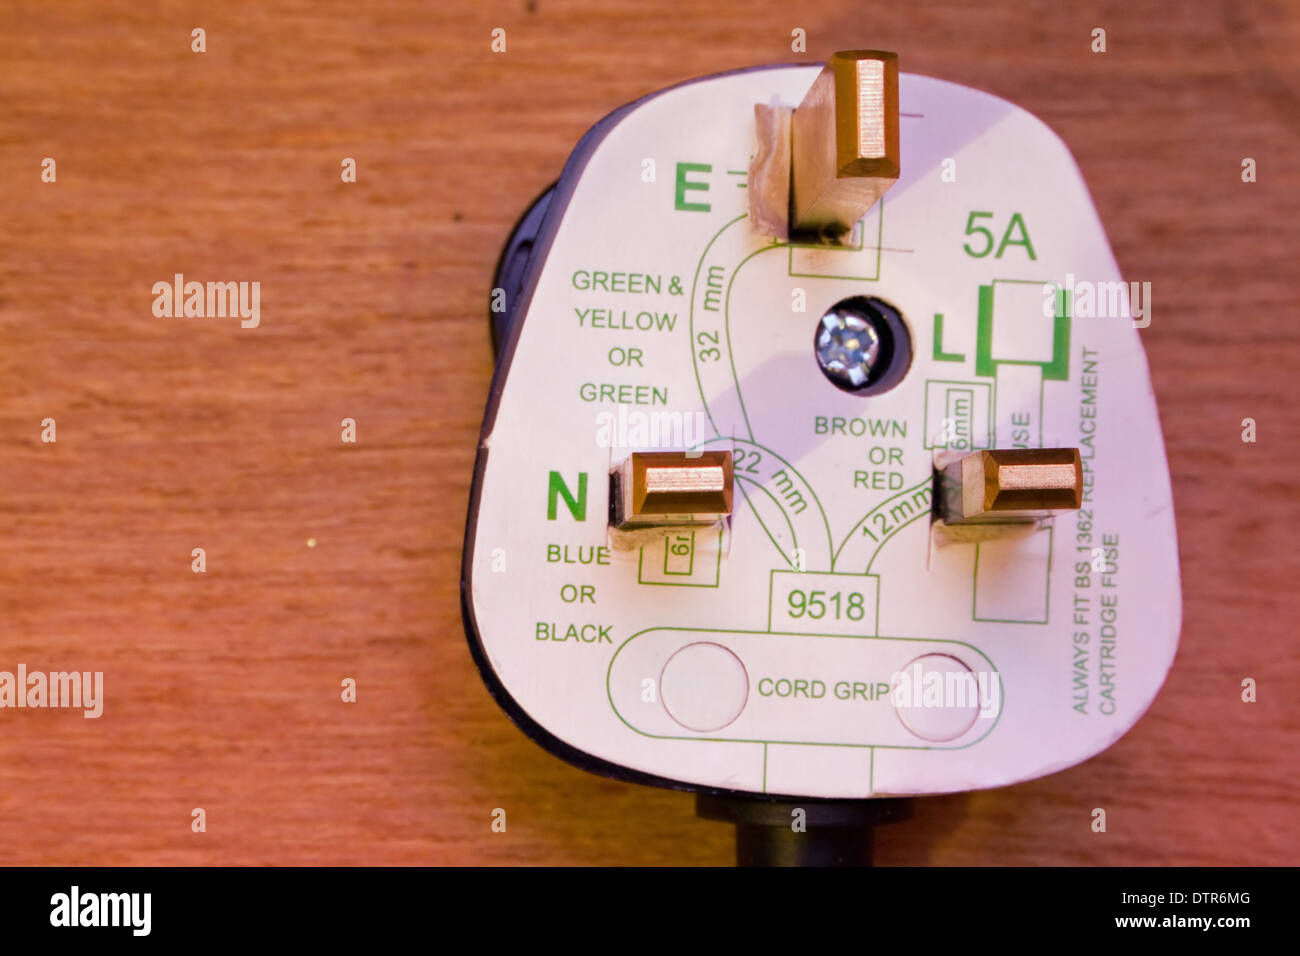 UK three pin plug with wiring diagram Stock Photo ... british wire diagram 